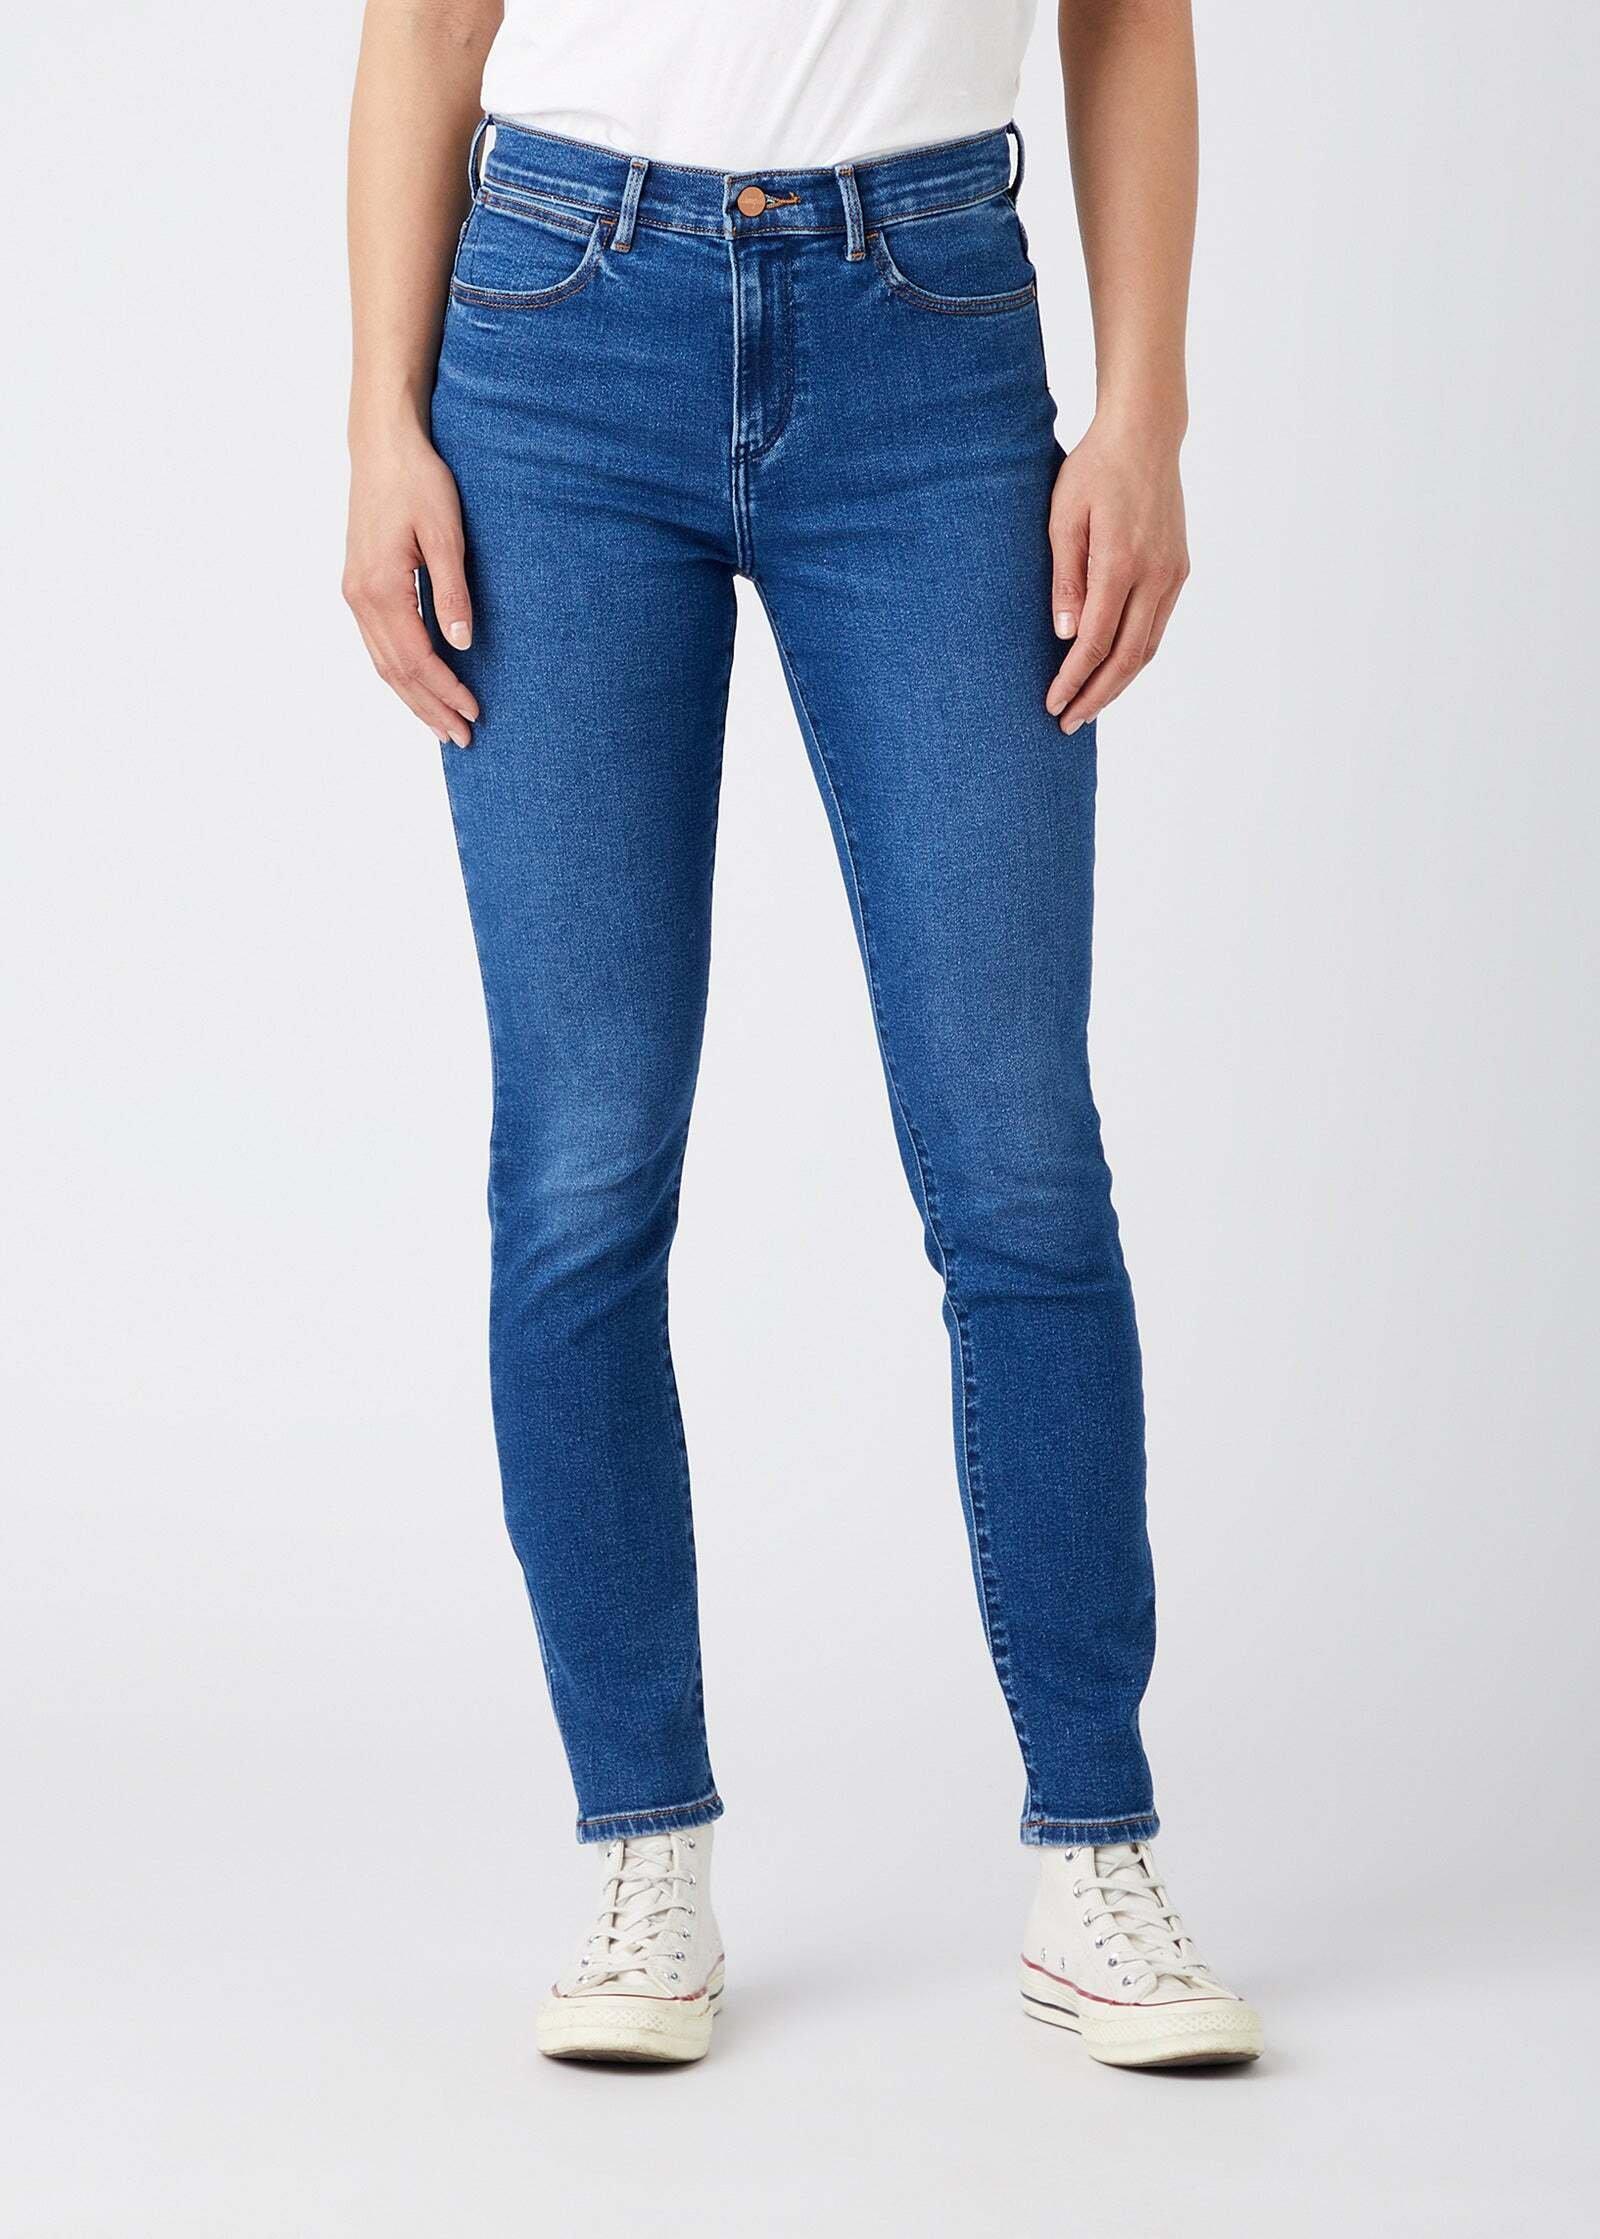 Jeans Skinny Fit High Rise Damen Blau Denim L34/W29 von Wrangler